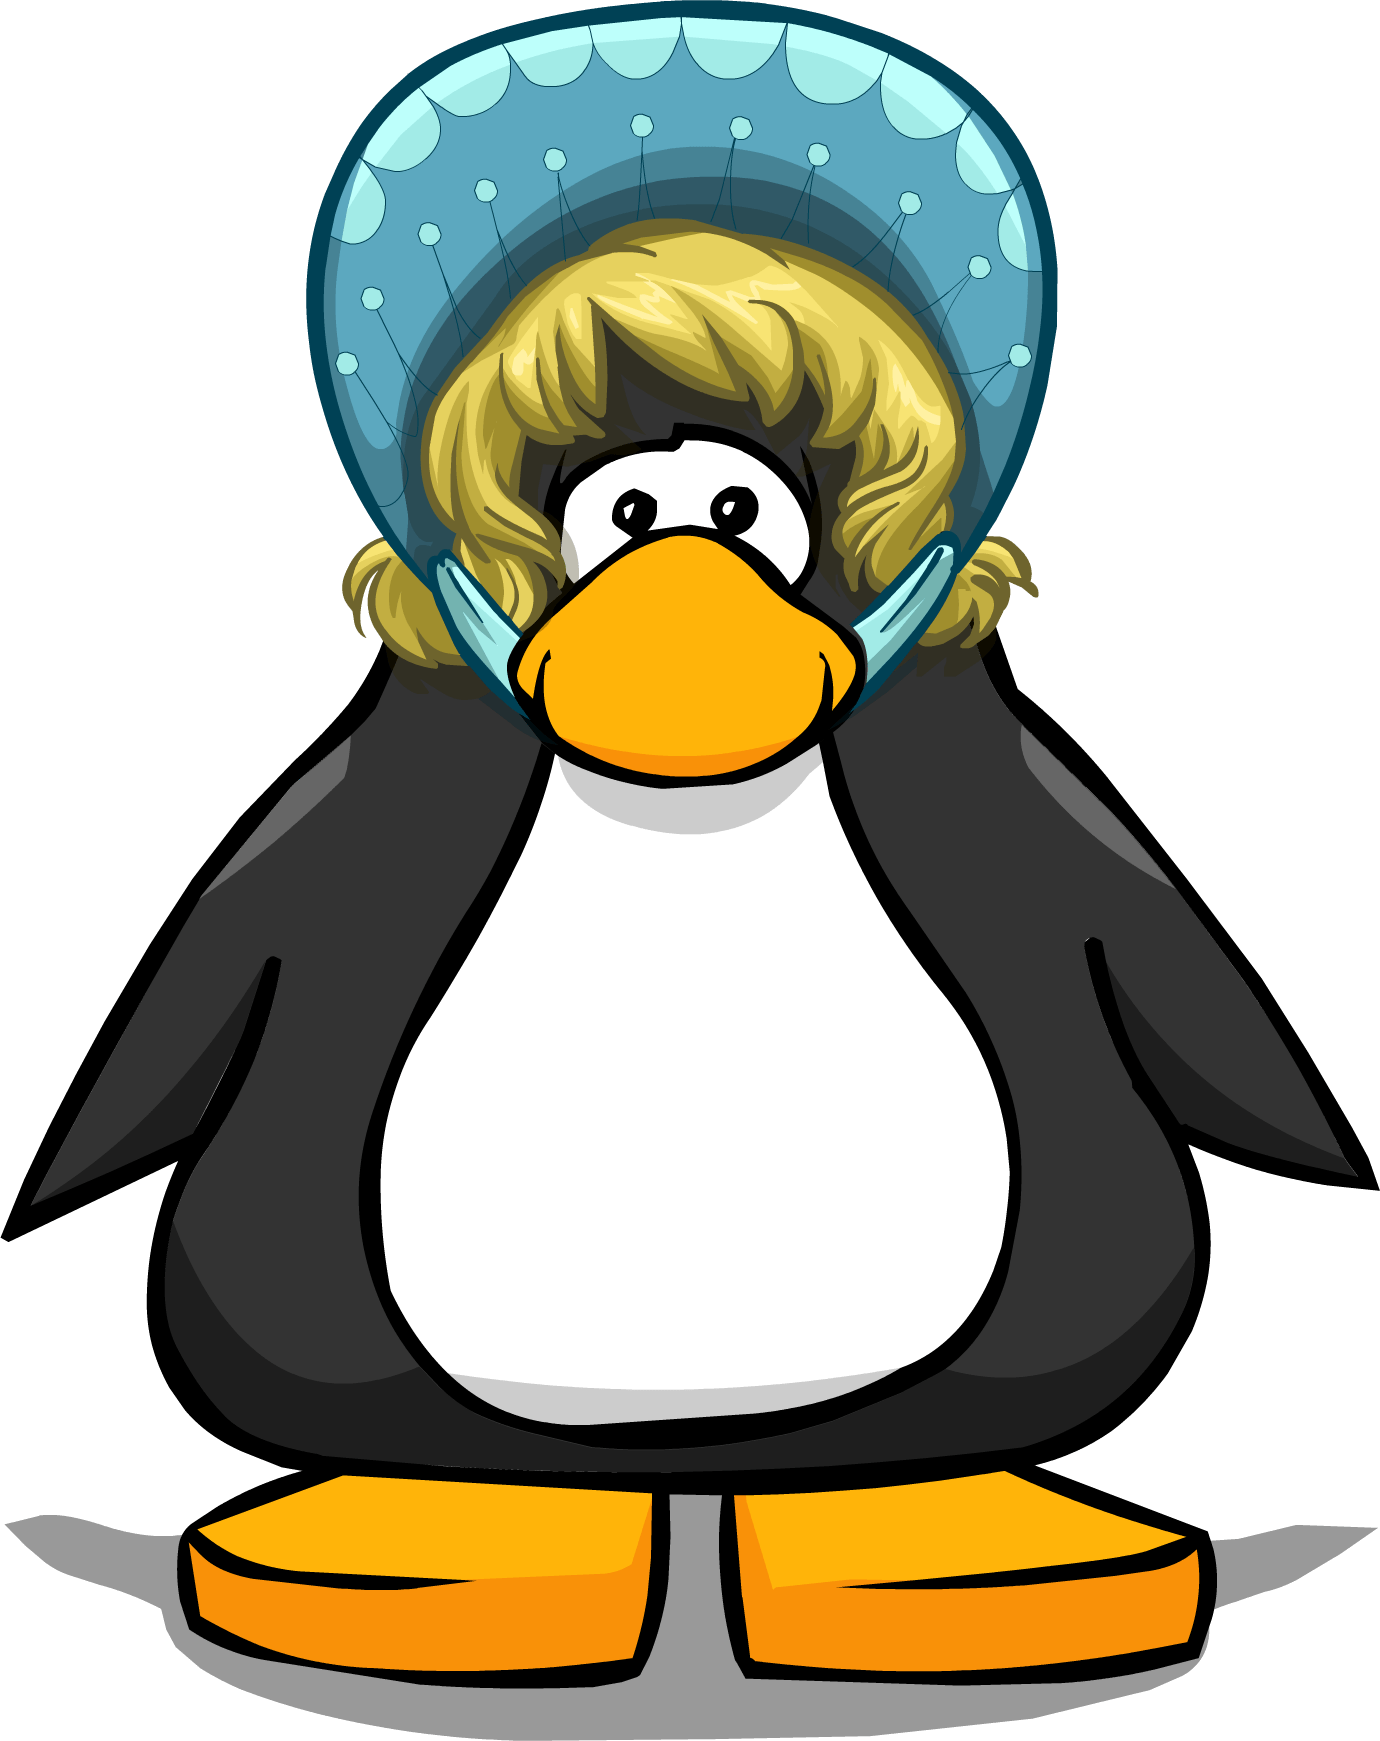 Russian Club Penguin (1380x1741)